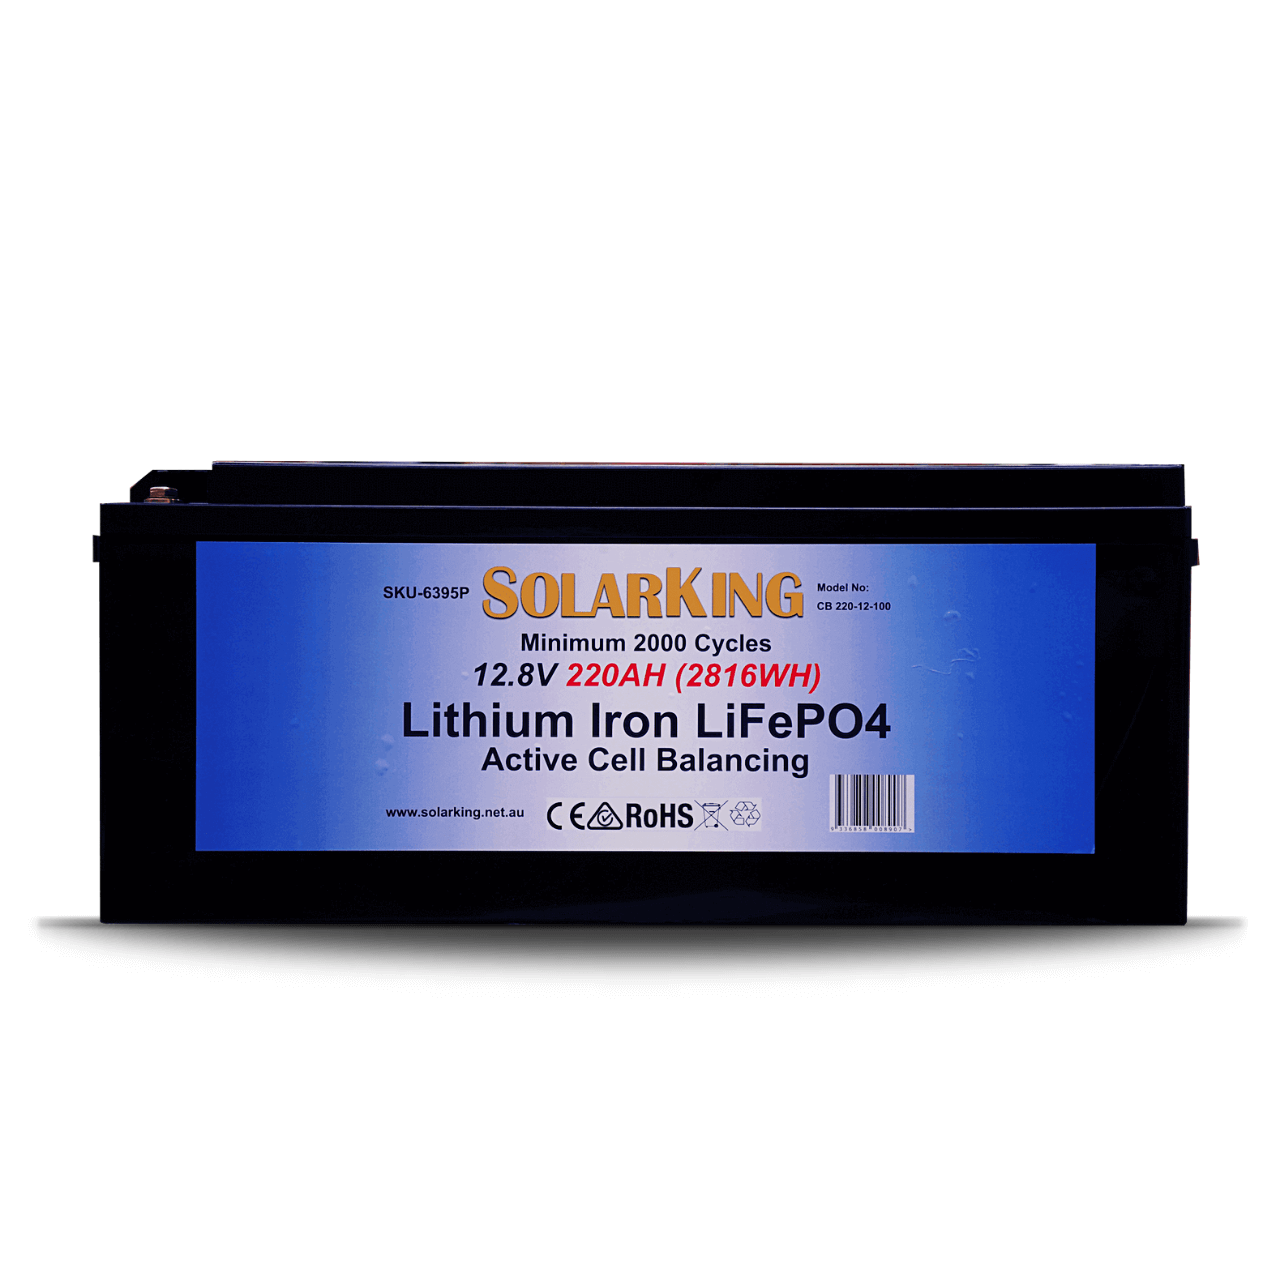 12.8V 220AH Solarking Lithium Iron Battery Plastic Case CB-220-12-100